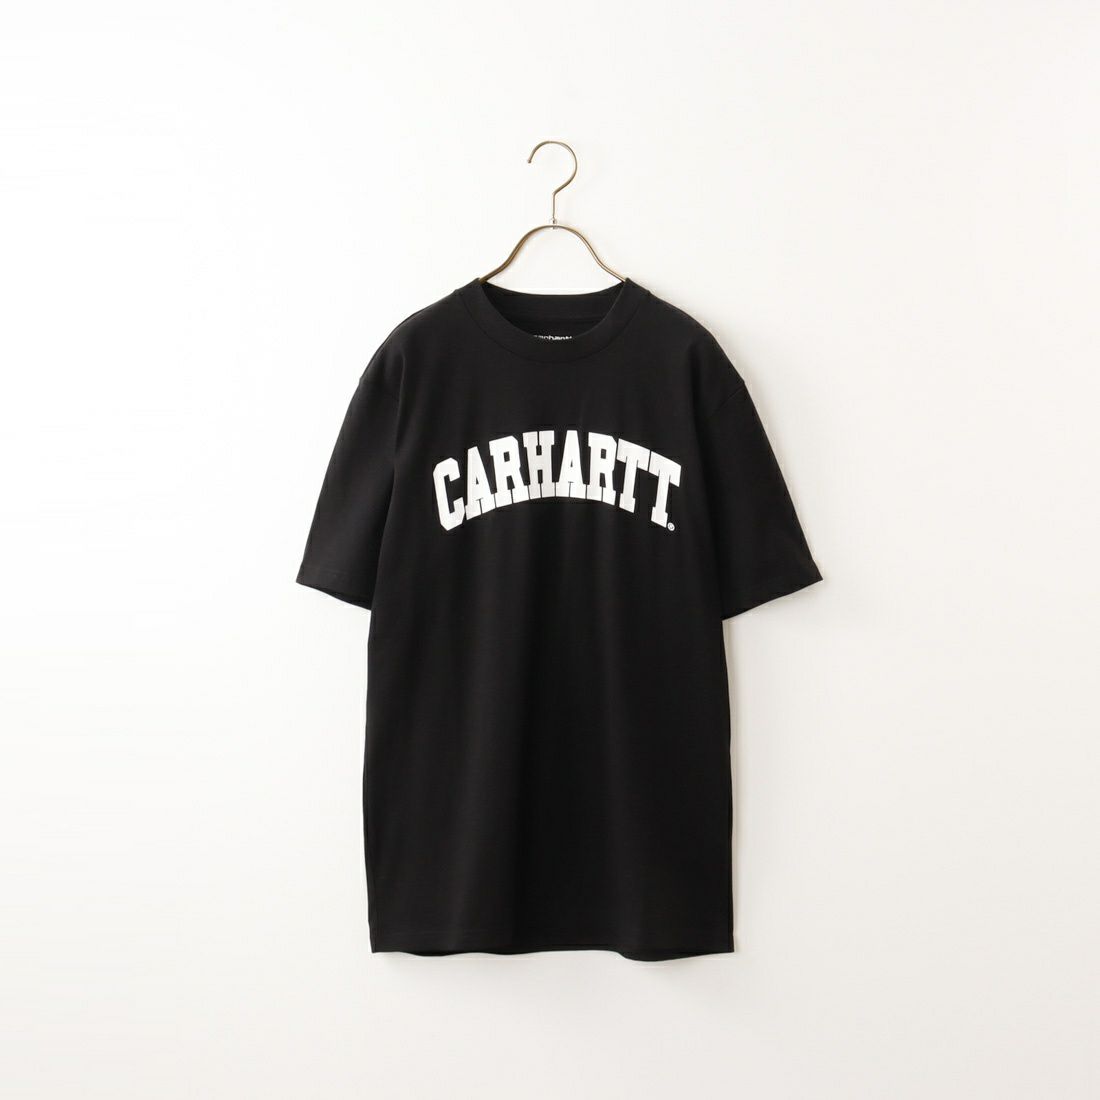 carhartt WIP [カーハートダブリューアイピー] UNIVERSITY ロゴプリントTシャツ [I028990] BLACK/WHIT